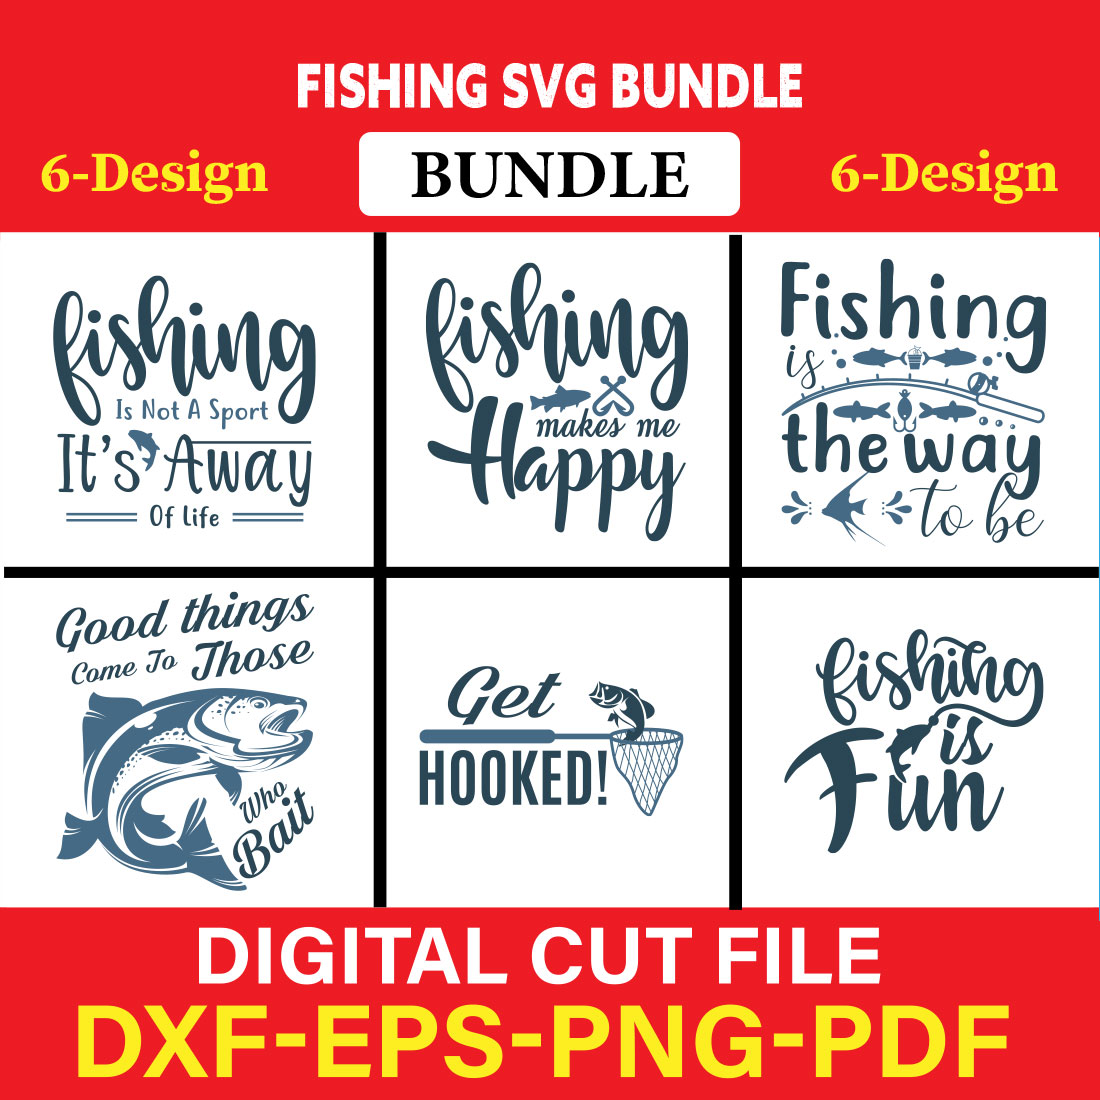 Fishing T-shirt Design Bundle Vol-2 cover image.